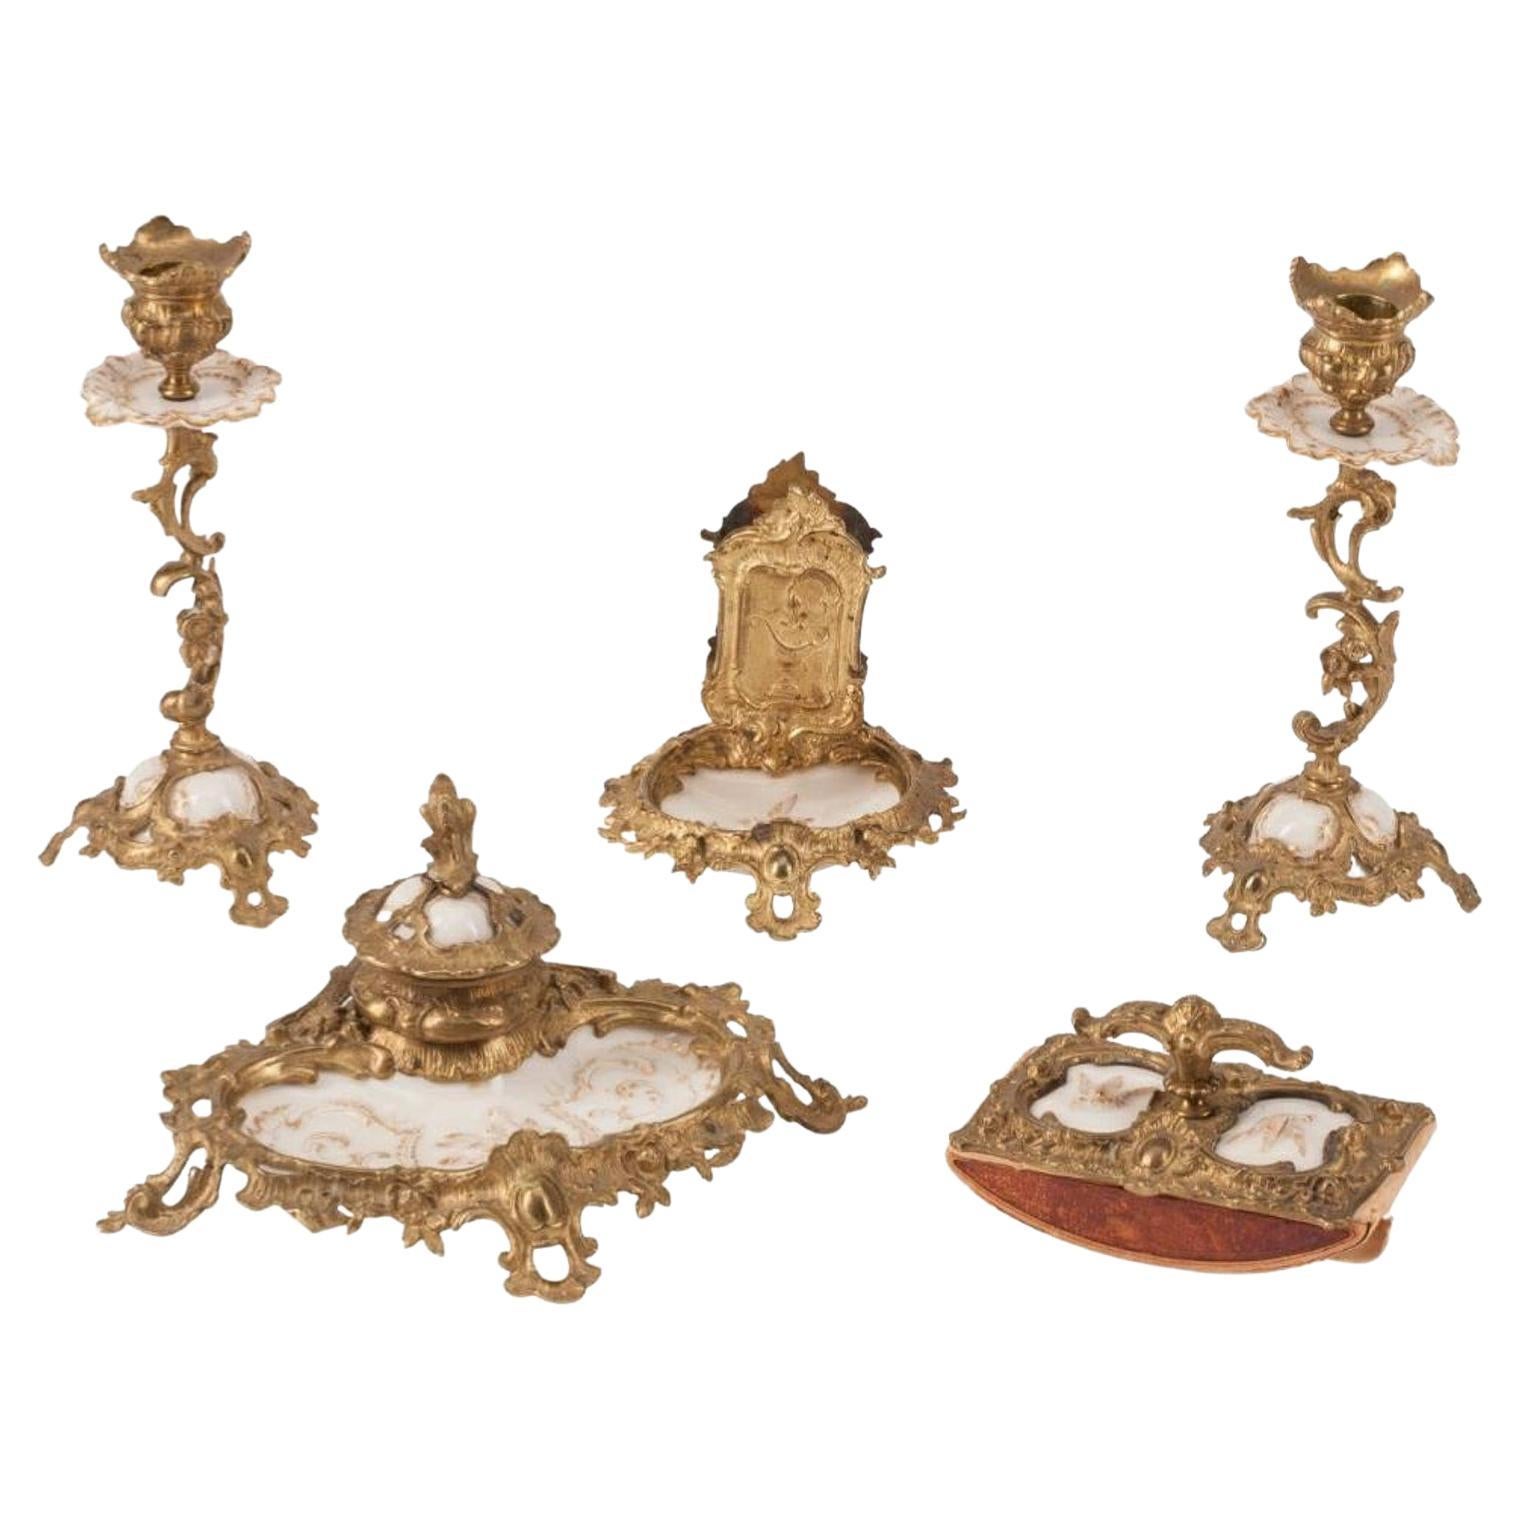 Fine 19th Century Ormolu Mounted KPM Porcelain Desk Set - Inkwell Candlesticks For Sale